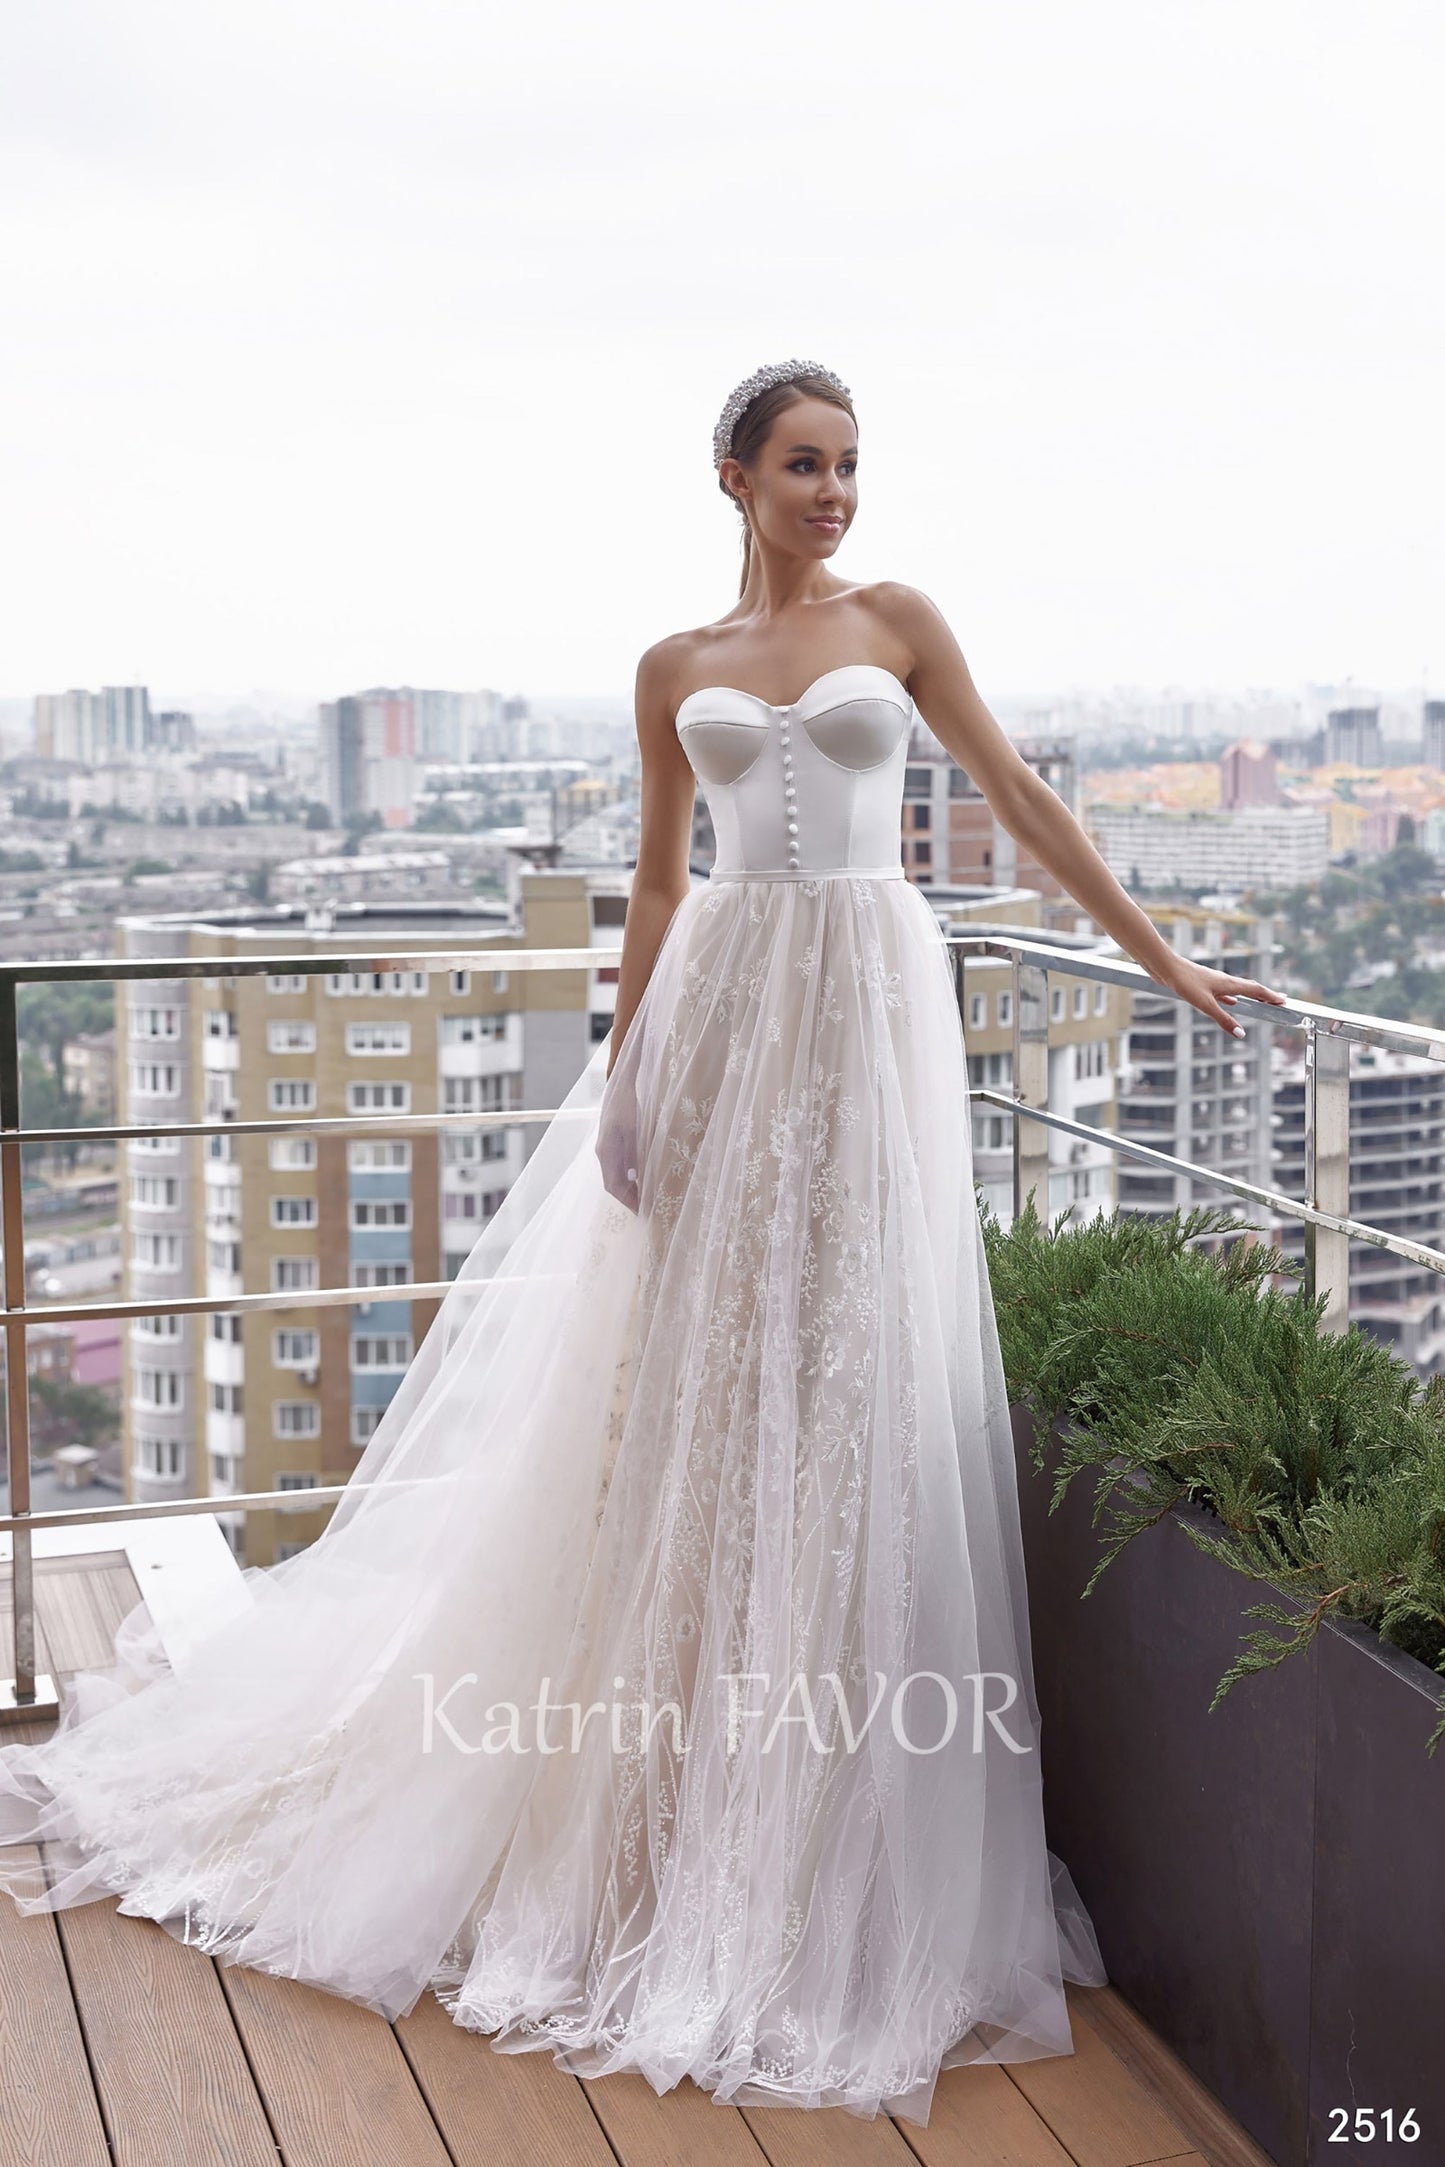 KatrinFAVORboutique-Detachable puff sleeve fairytale wedding dress